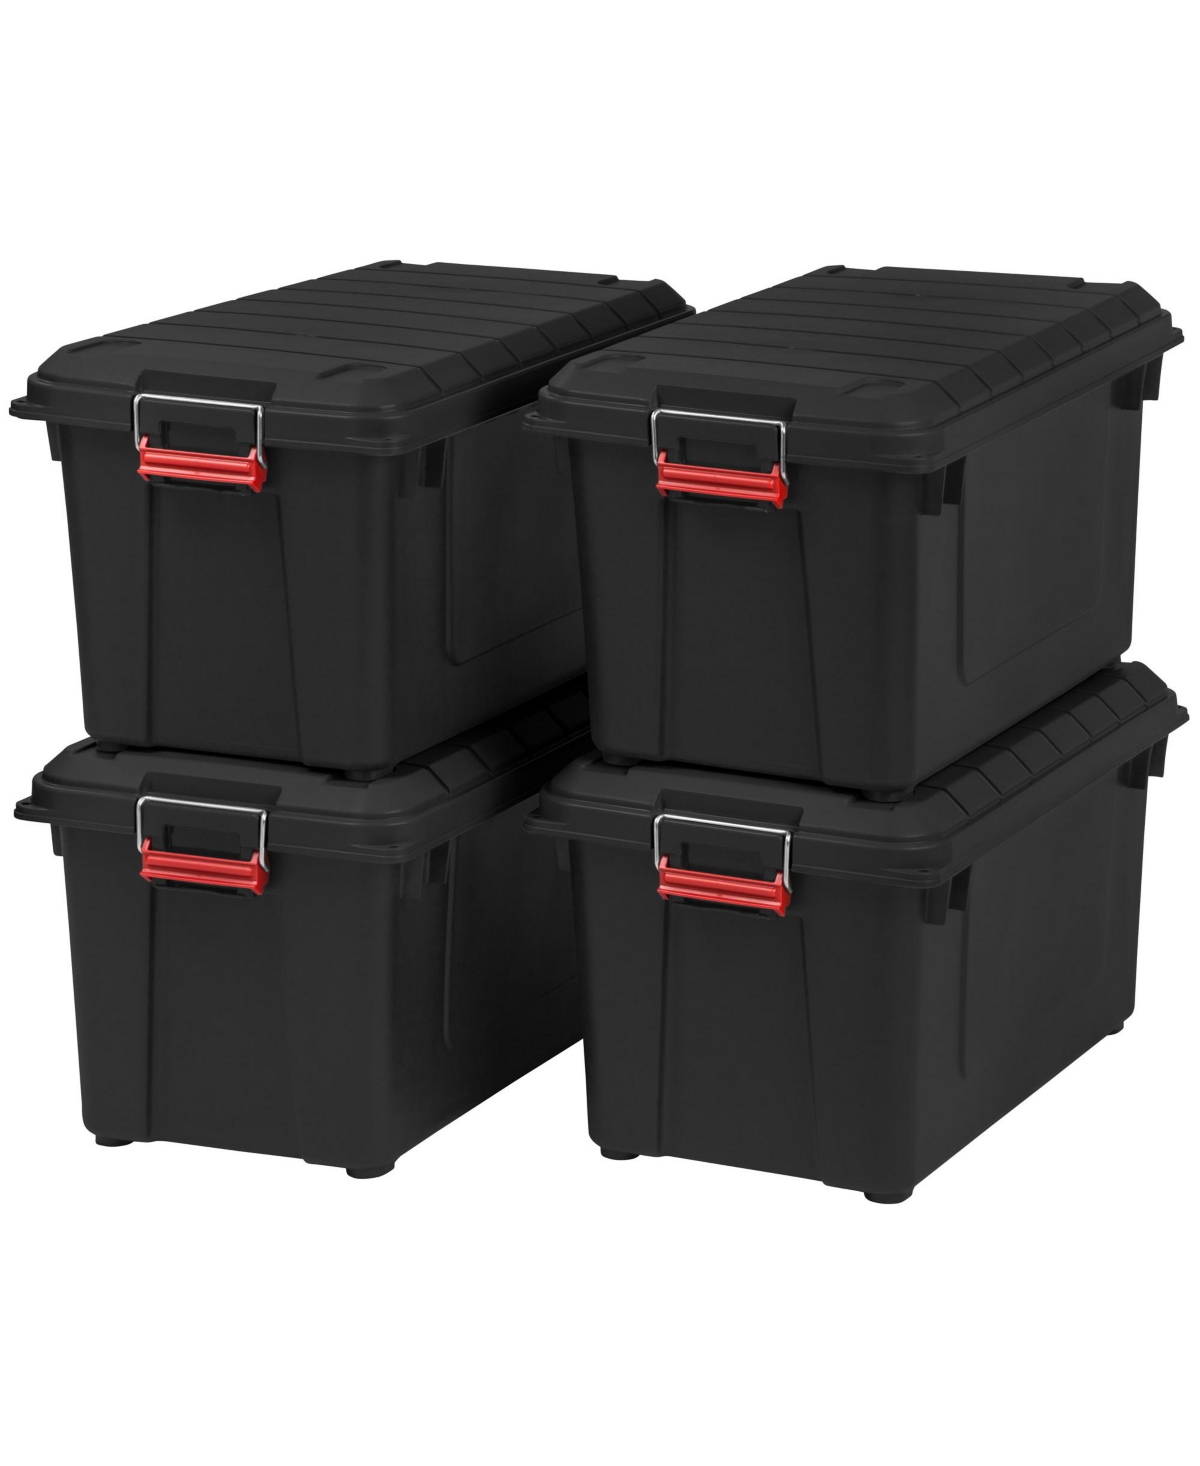 82 Quart WeatherPro Storage Box, Store-It-All Utility Tote, Black, Set of 4 - Black